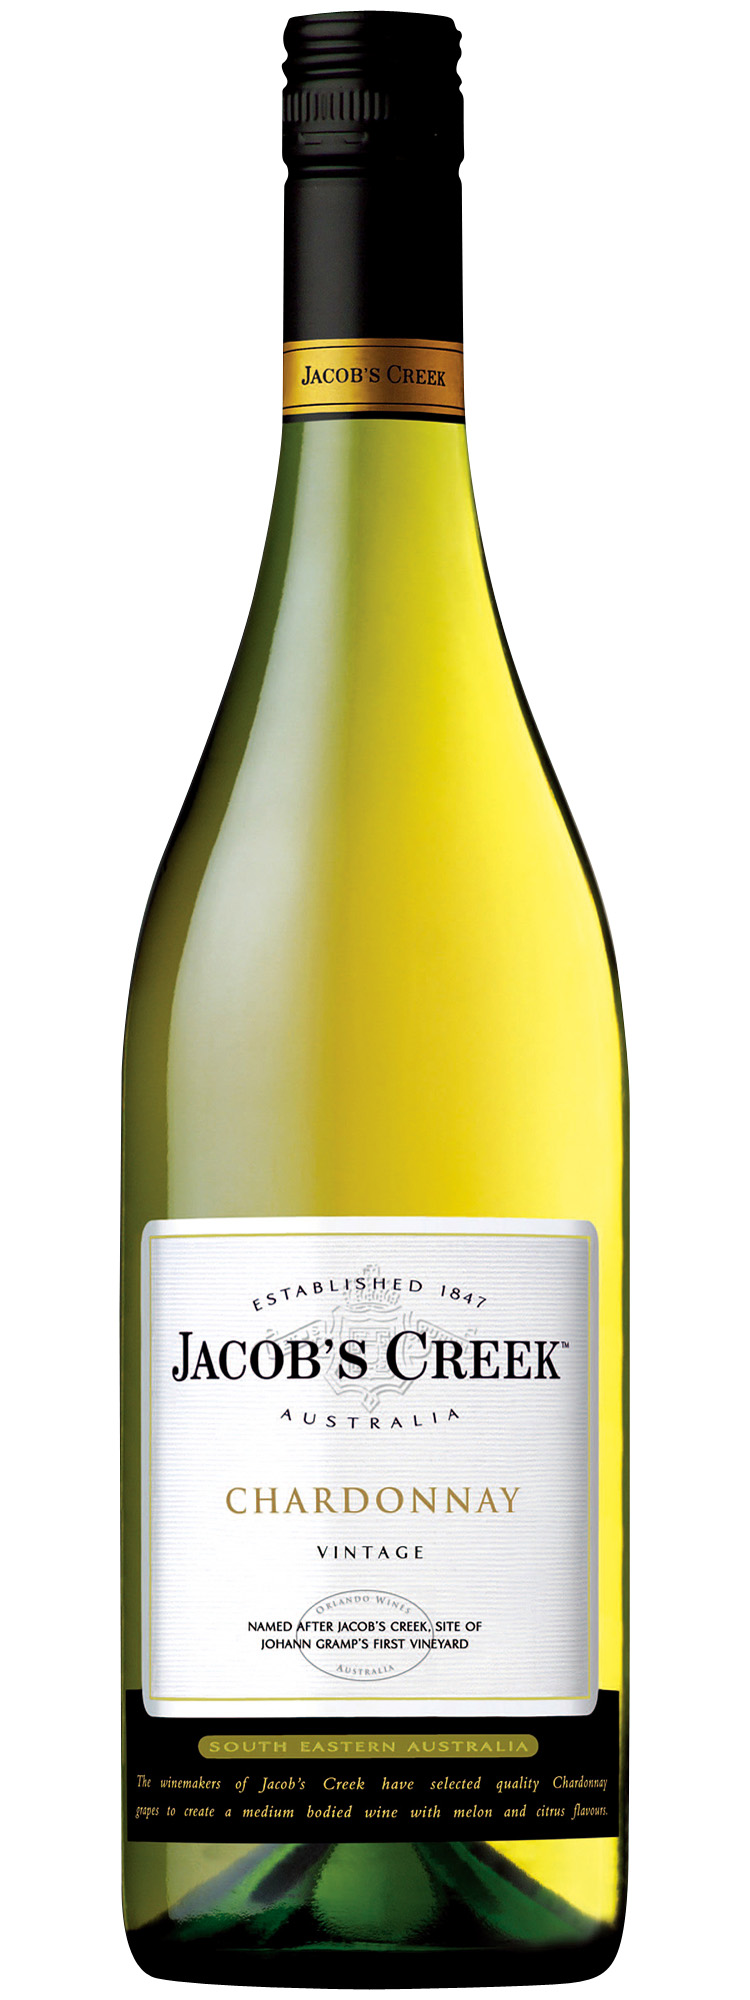 Jacob's Creek Chardonnay 2013